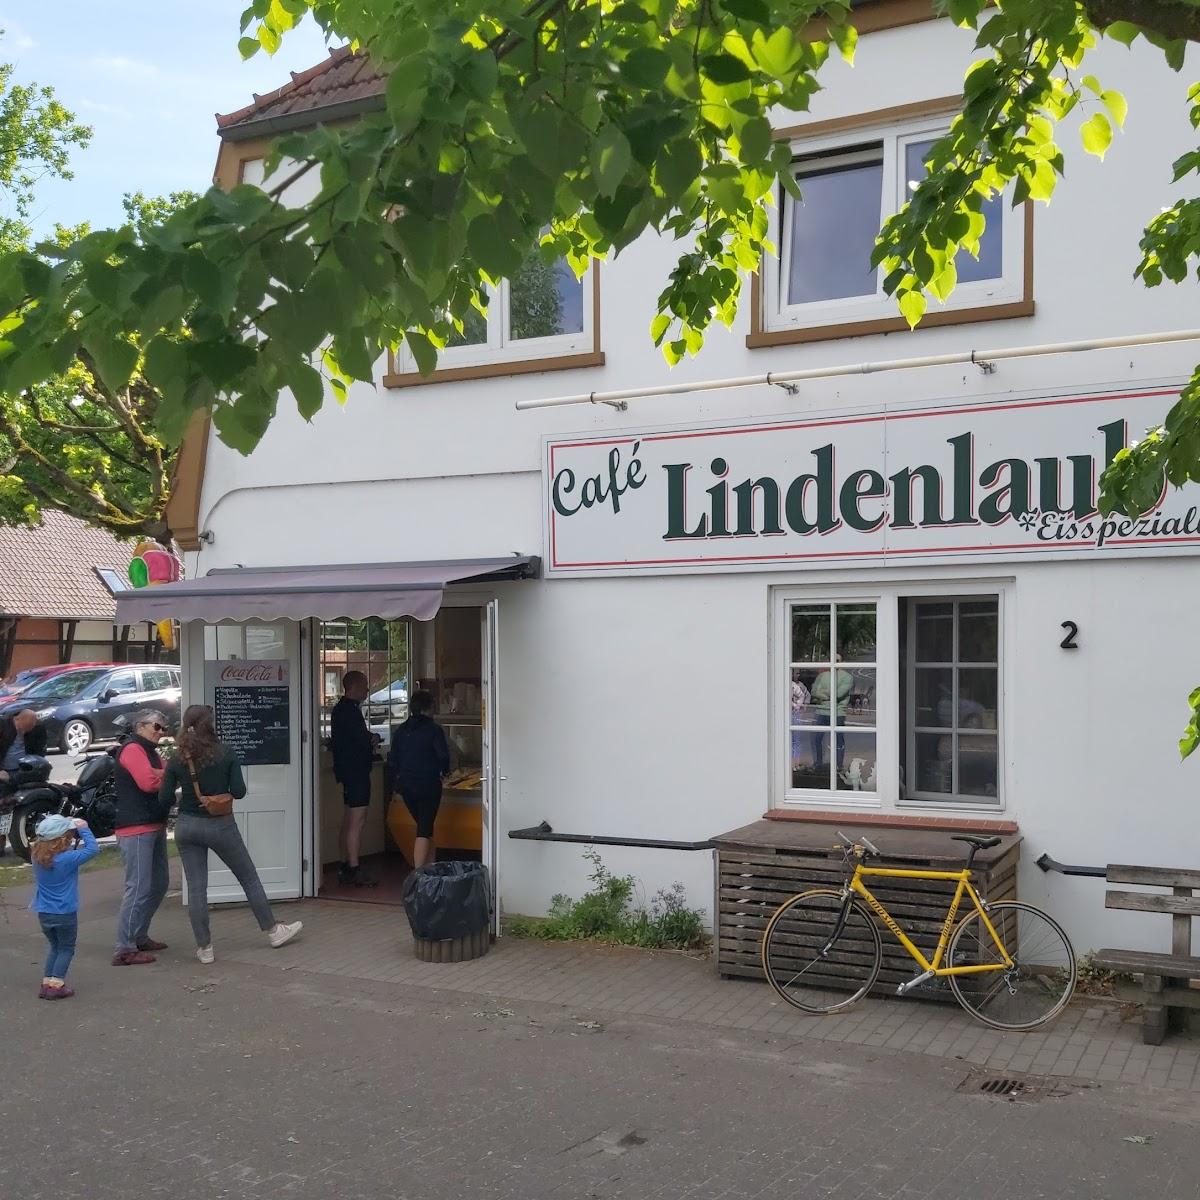 Restaurant "Café Lindenlaub" in Ottersberg